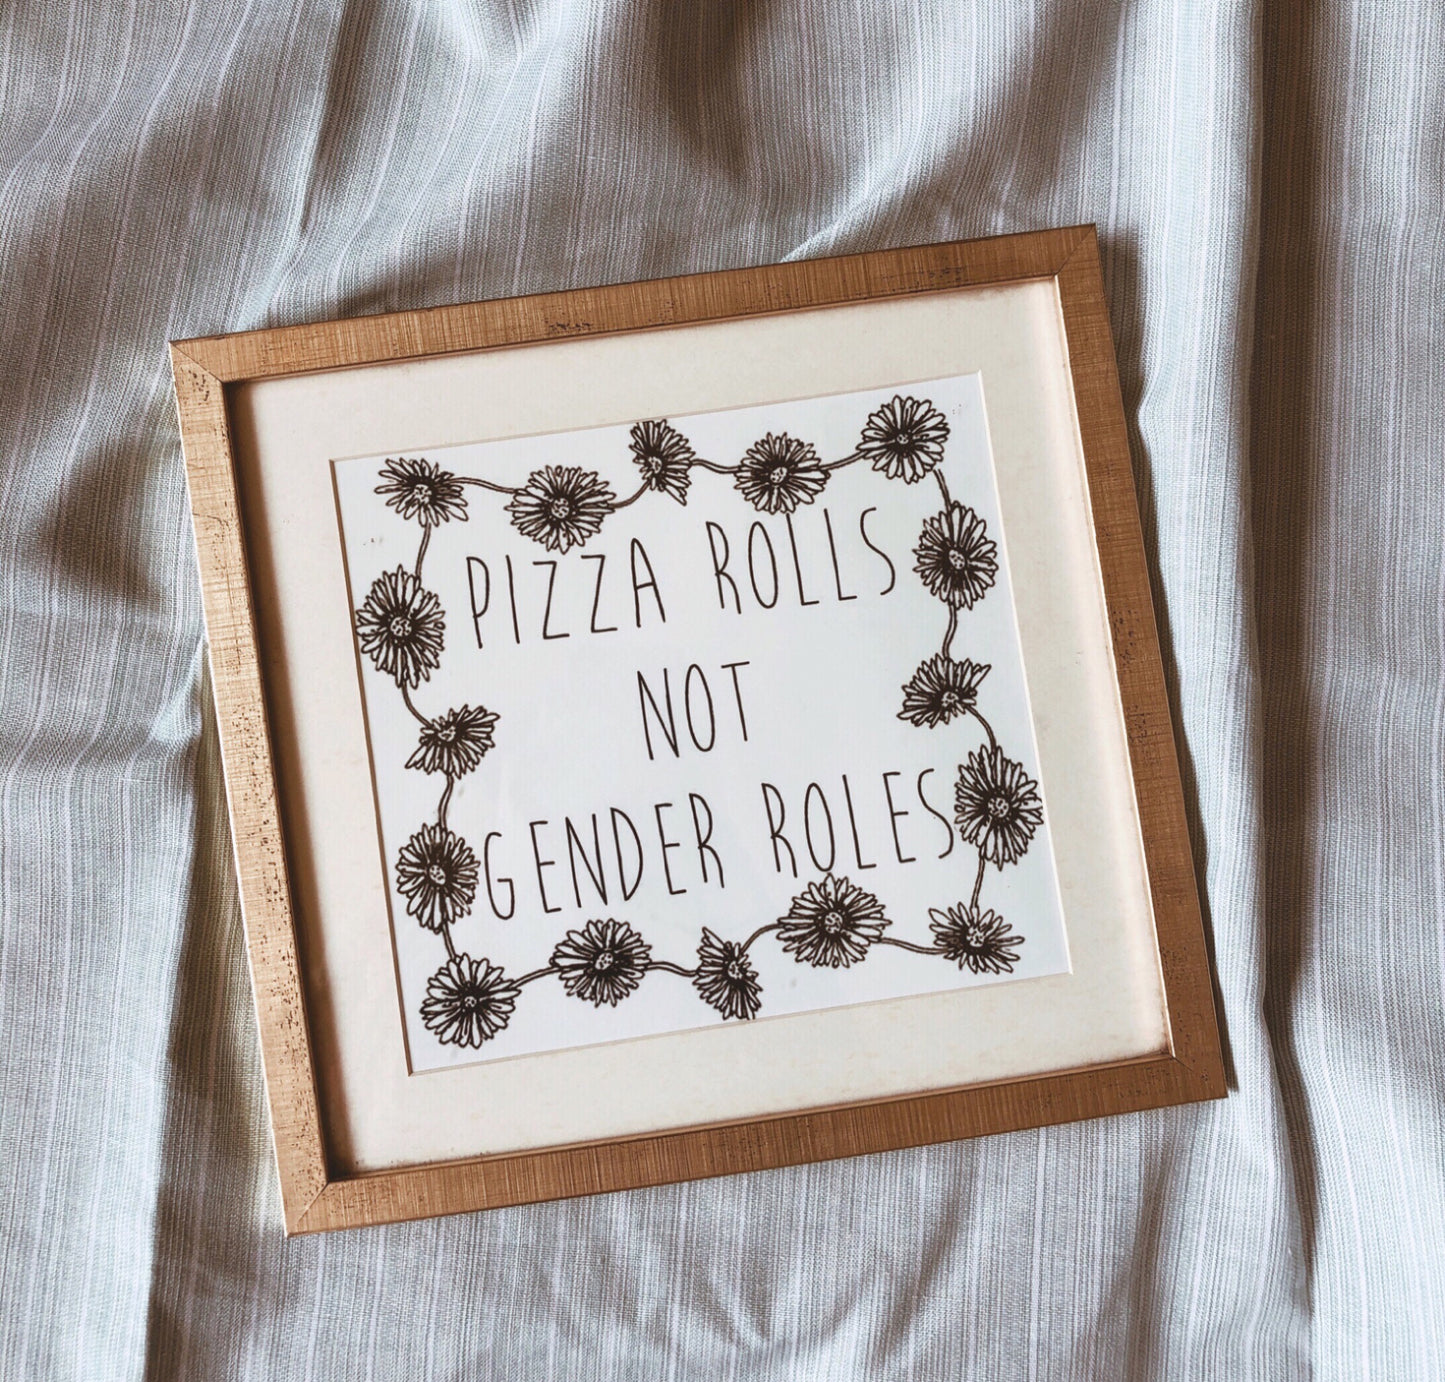 Pizza Rolls Not Gender Rolls Frame